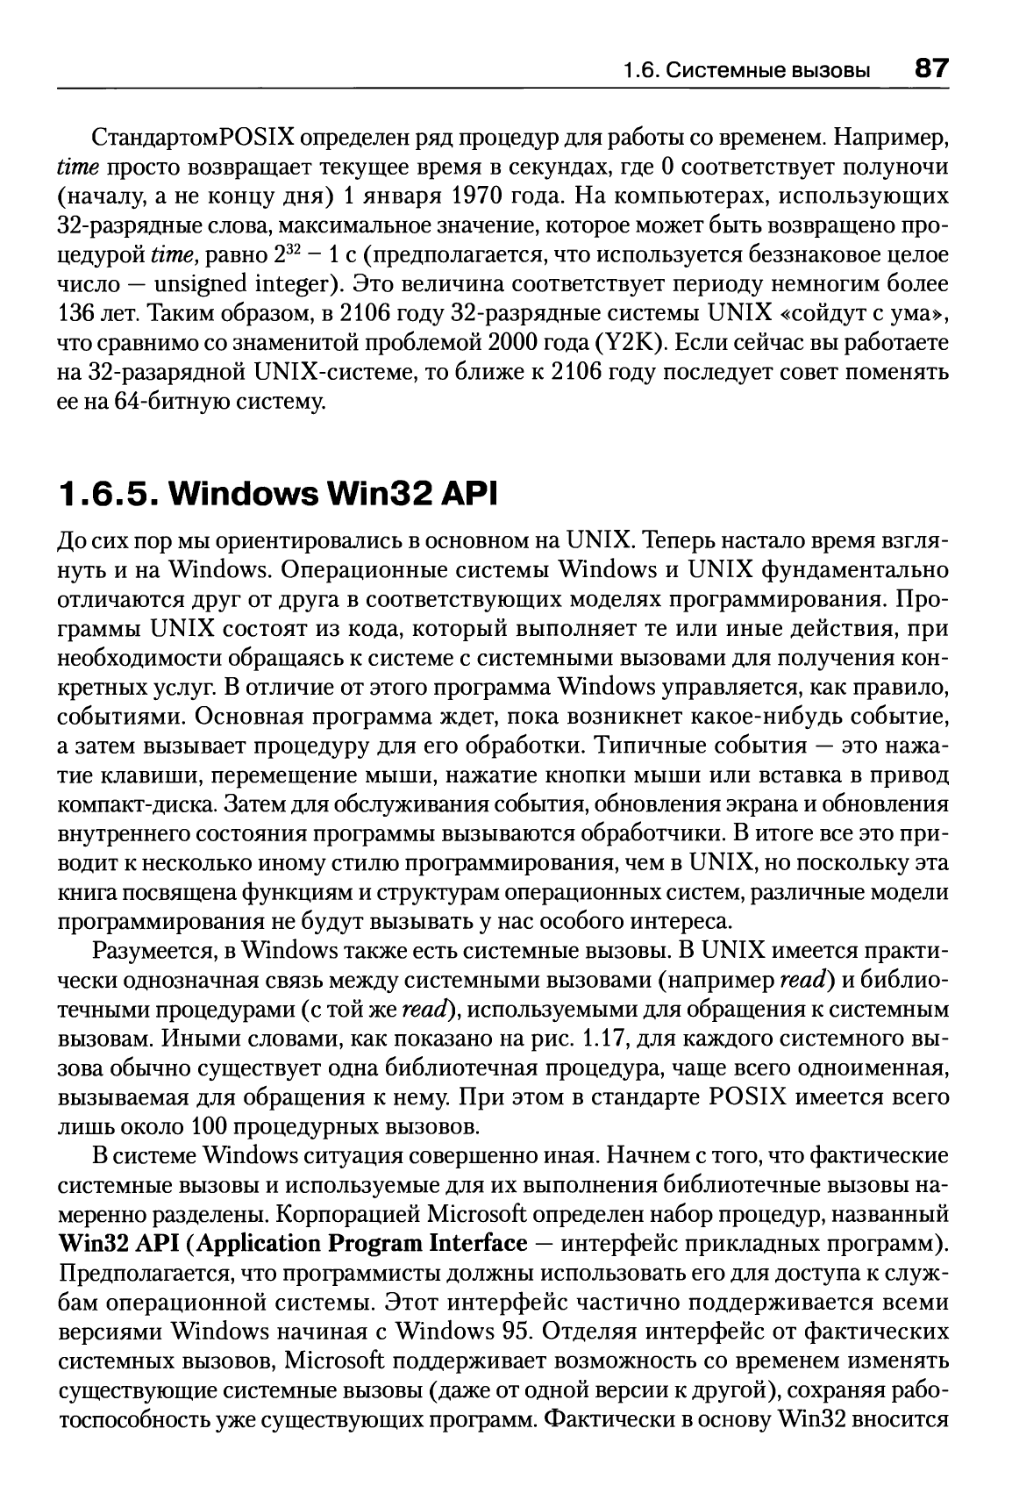 1.6.5. Windows Win32 API